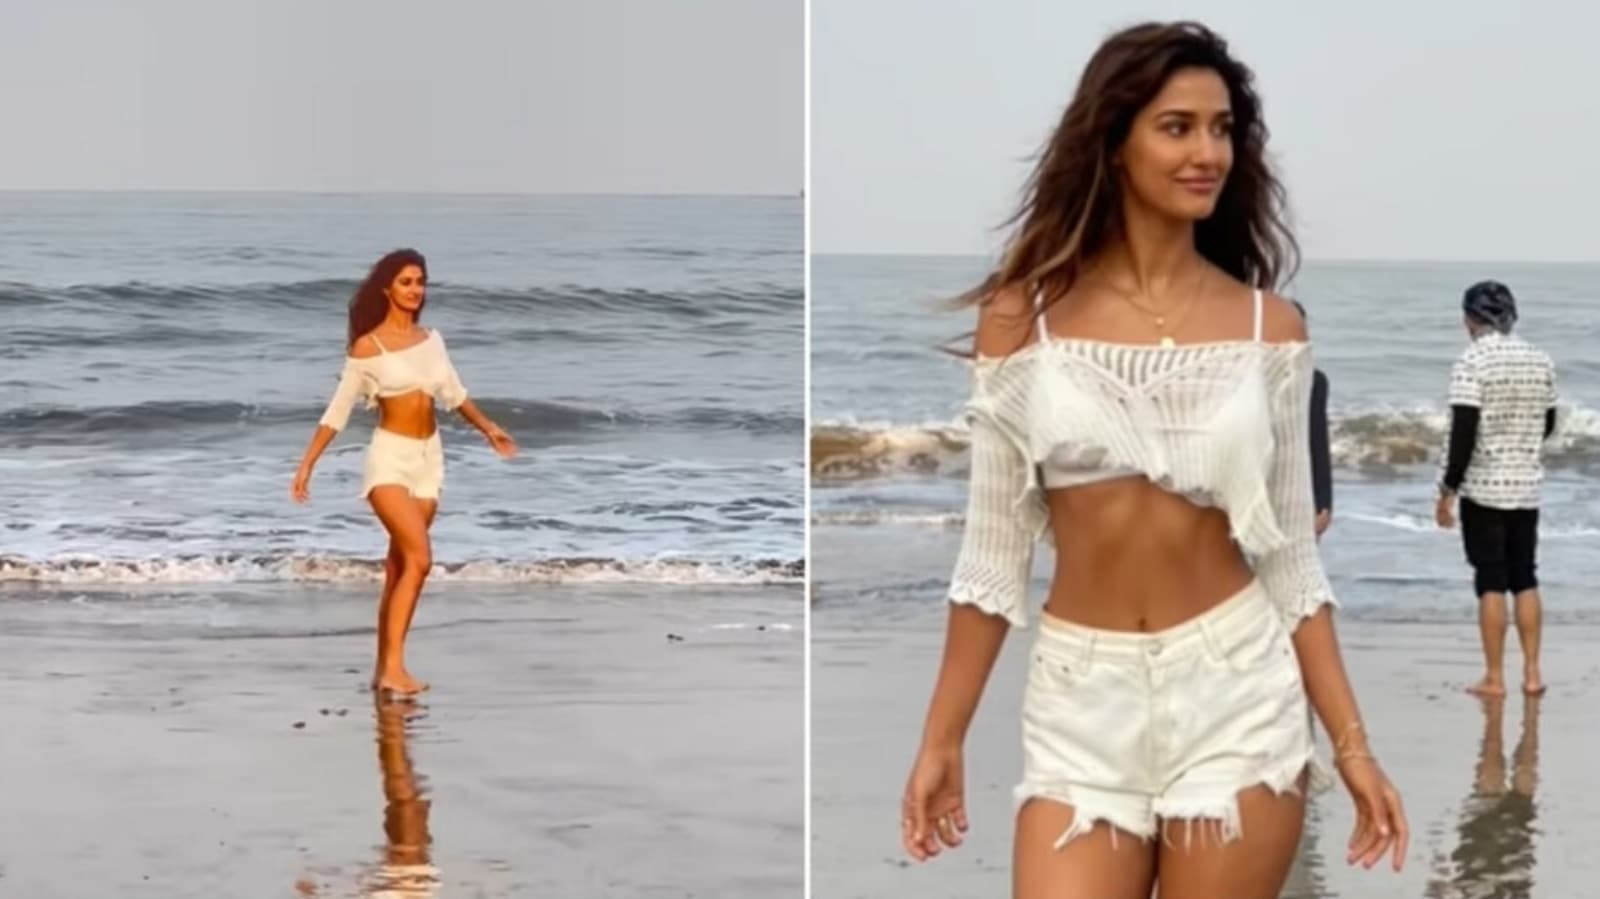 Disha Patani Ka Xxx Video - Disha Patani shares her video from beach day, fans say 'gorgeous'. Watch |  Bollywood - Hindustan Times